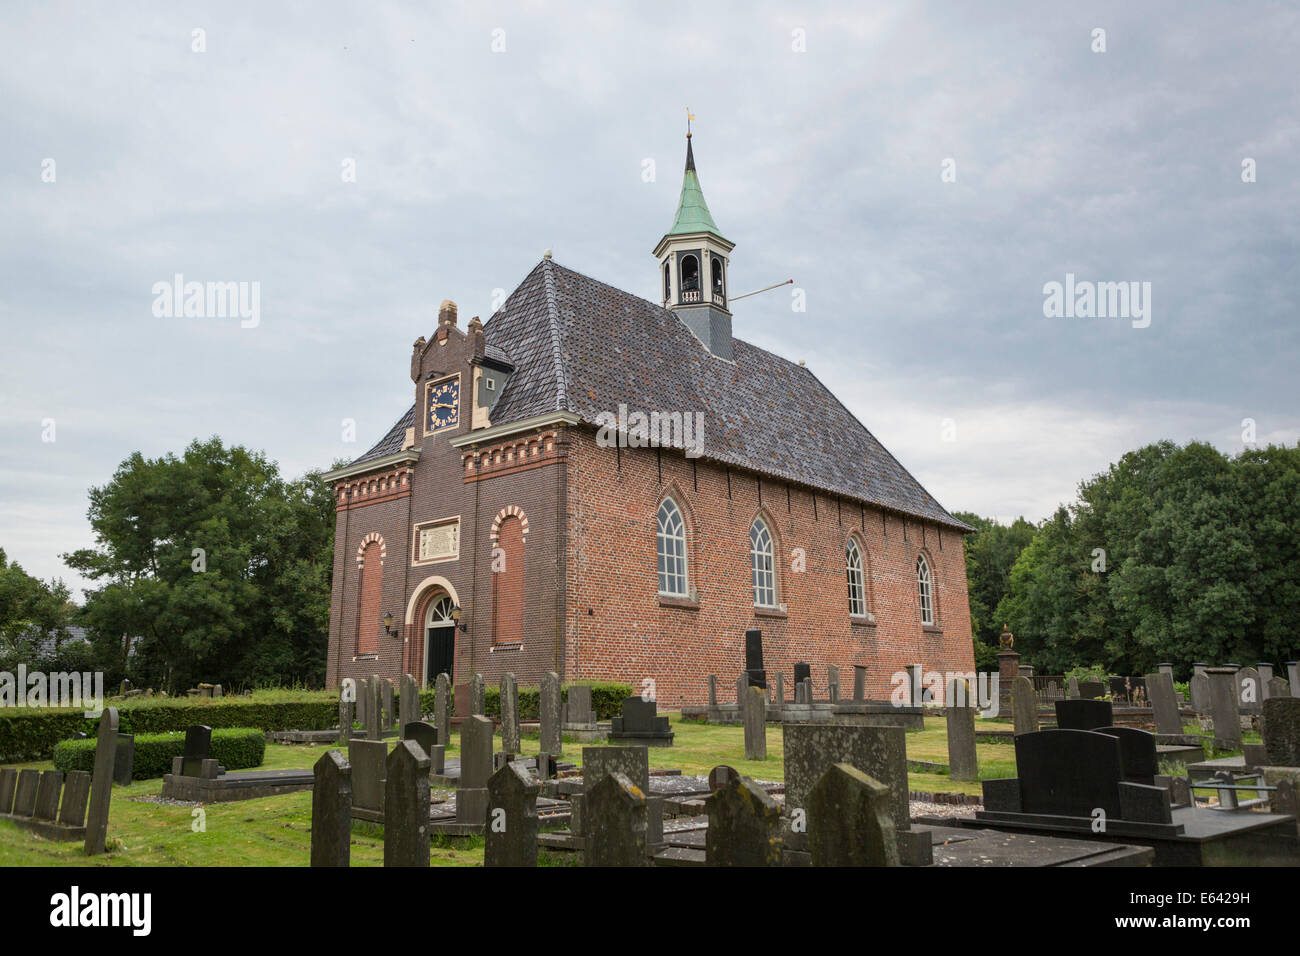 La iglesia reformada holandesa de Nieuw-Scheemda, provincia de Groningen, construido en 1661 Foto de stock